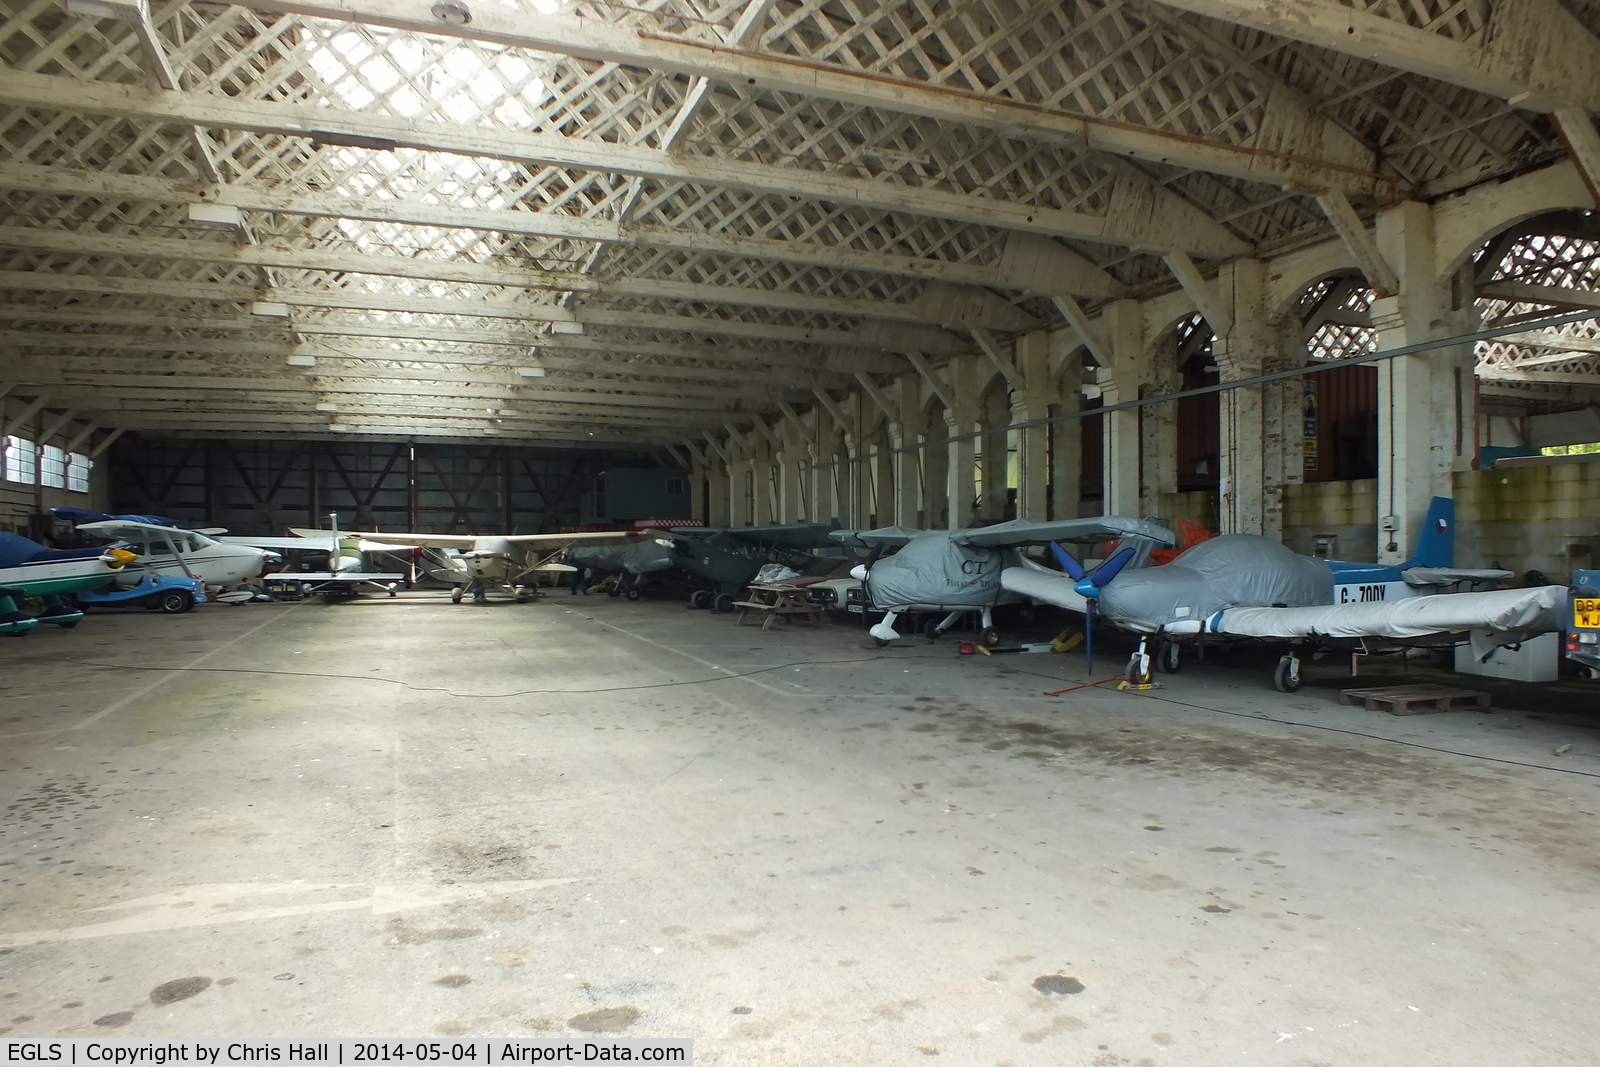 Old Sarum Airfield Airport, Salisbury, England United Kingdom (EGLS) - inside the main hangar at Old Sarum